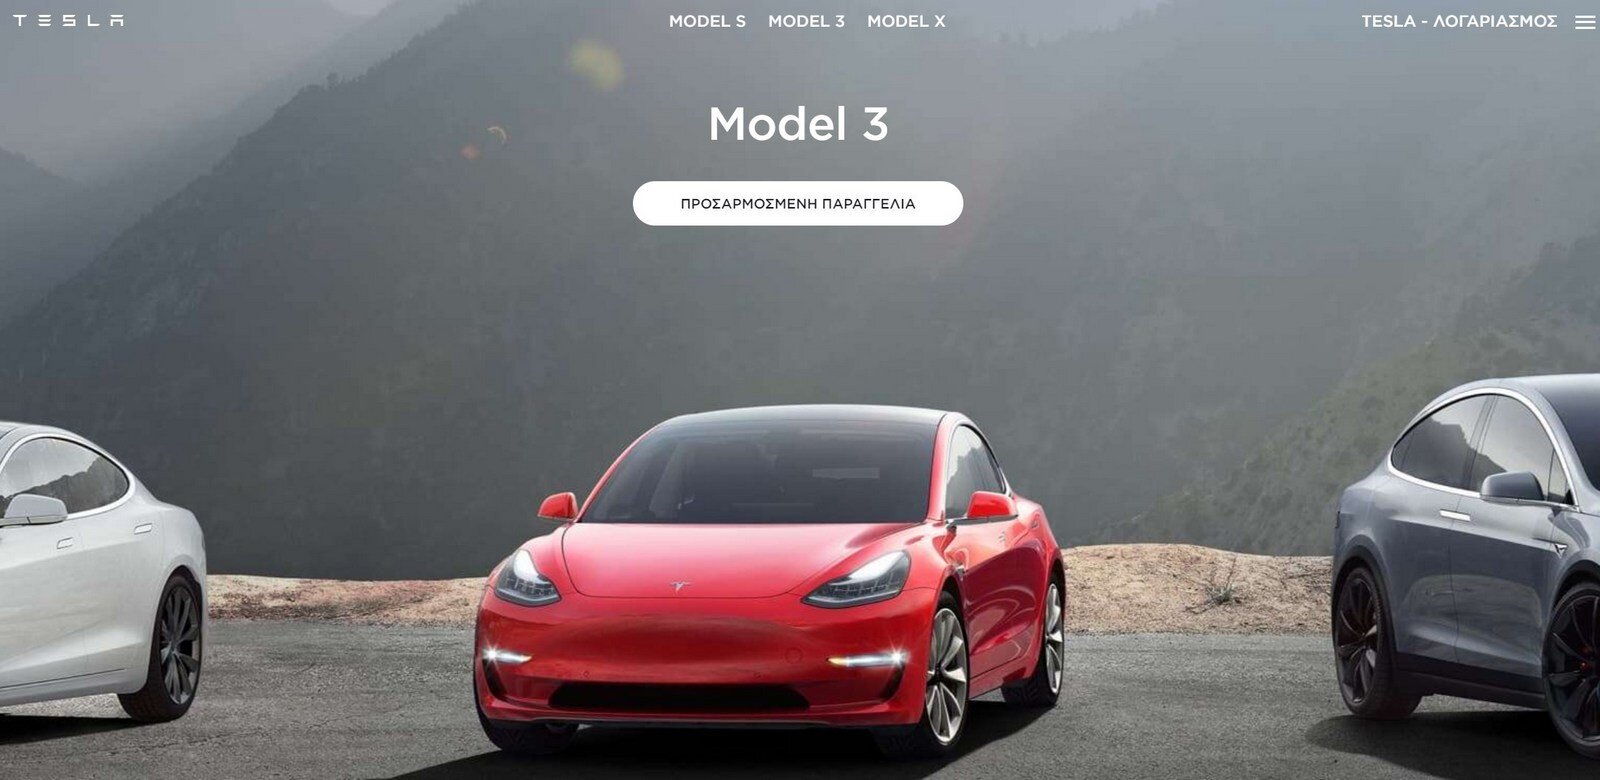 Tesla: Έναρξη ηλεκτρονικών πωλήσεων στην Ελλάδα των Model 3, Model S και Model Χ με τιμές από €45.990